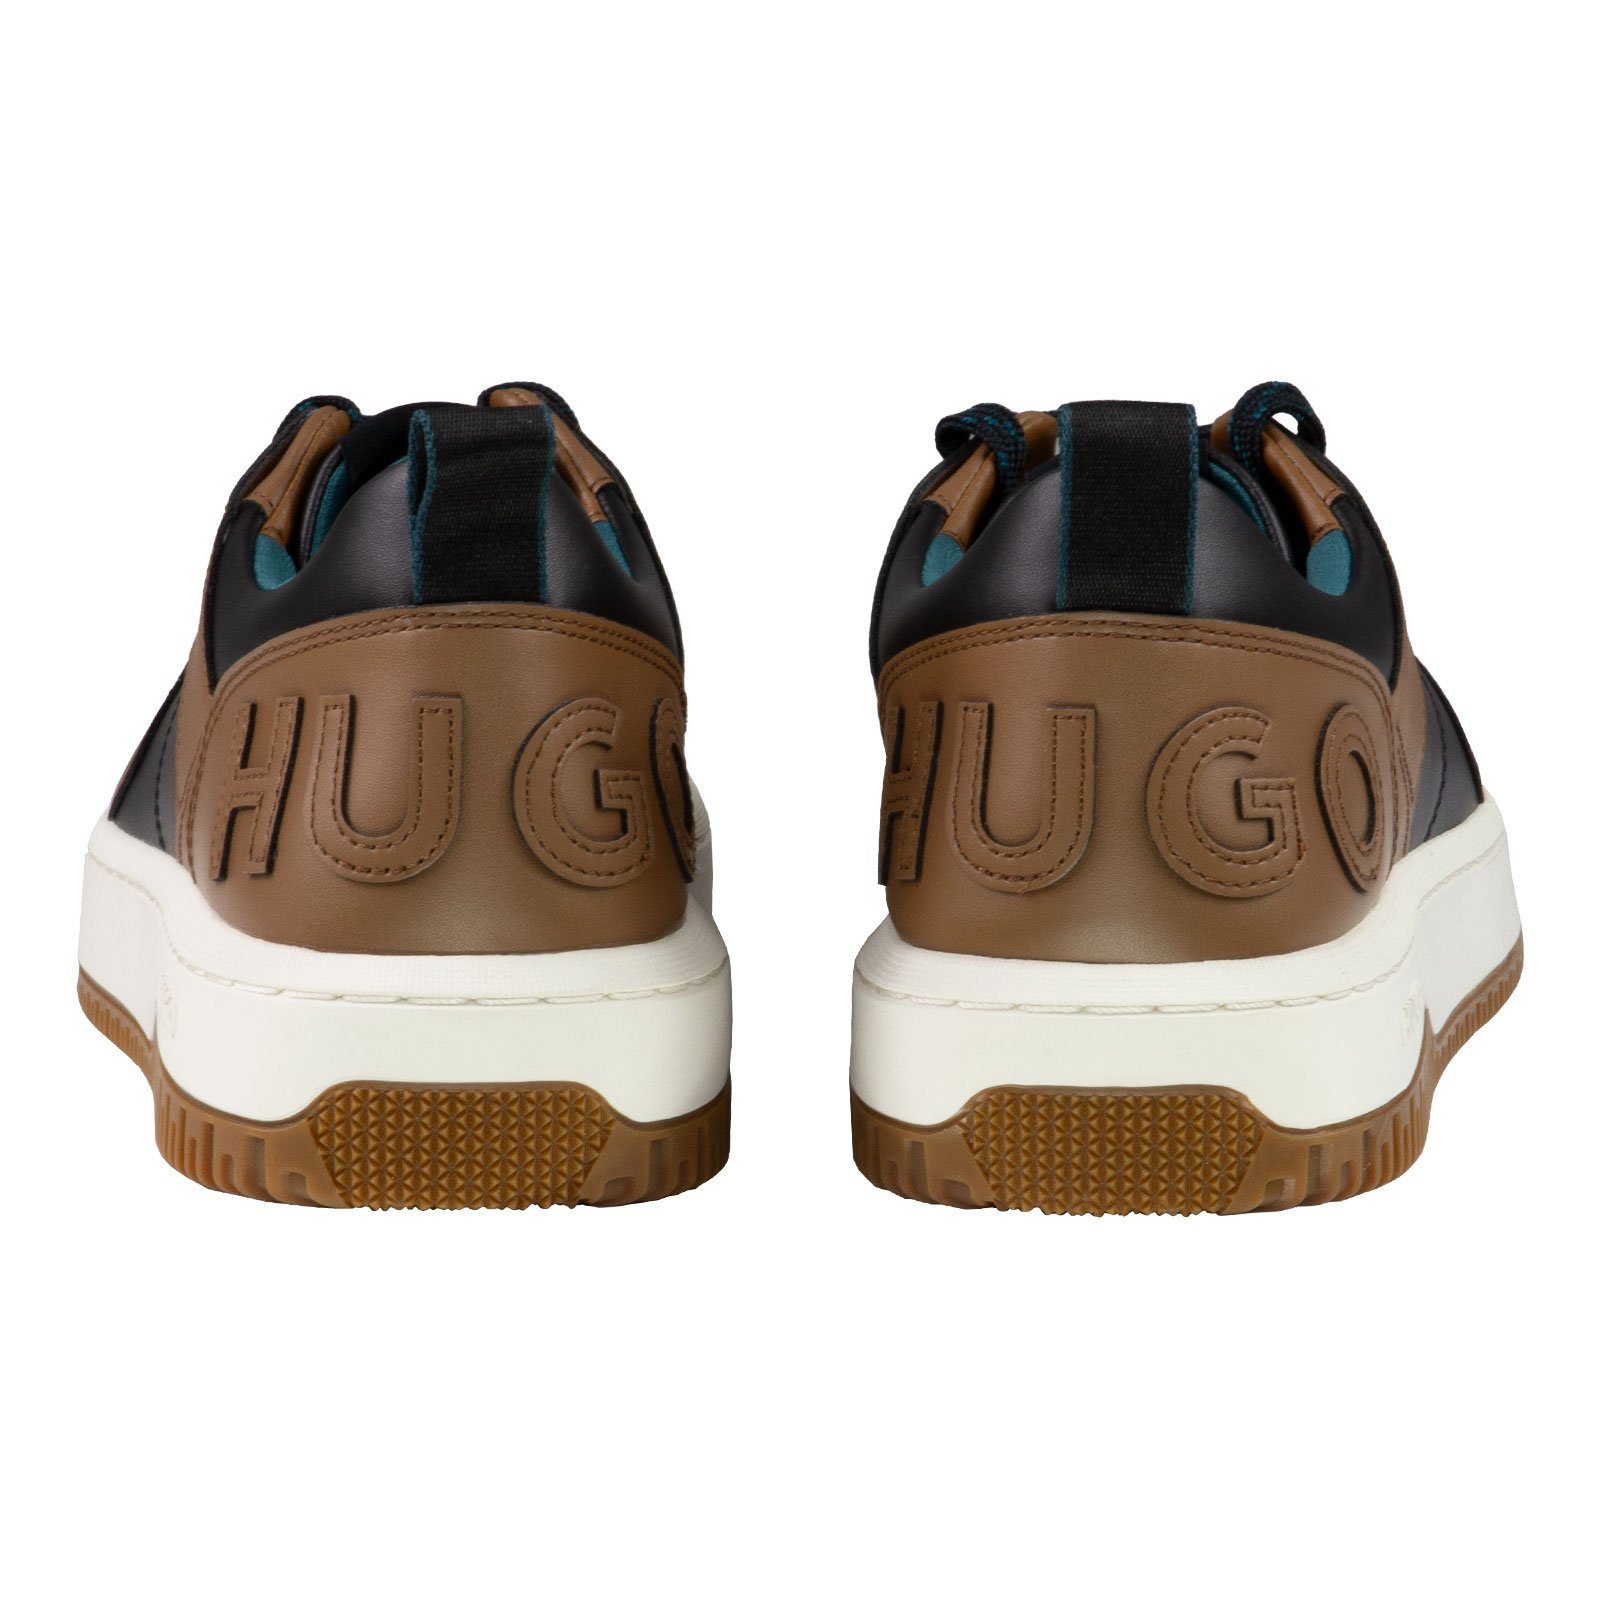 HUGO Kilian Tenn flmx Sneaker brown Ferse mit Logo-Patch open an der 240